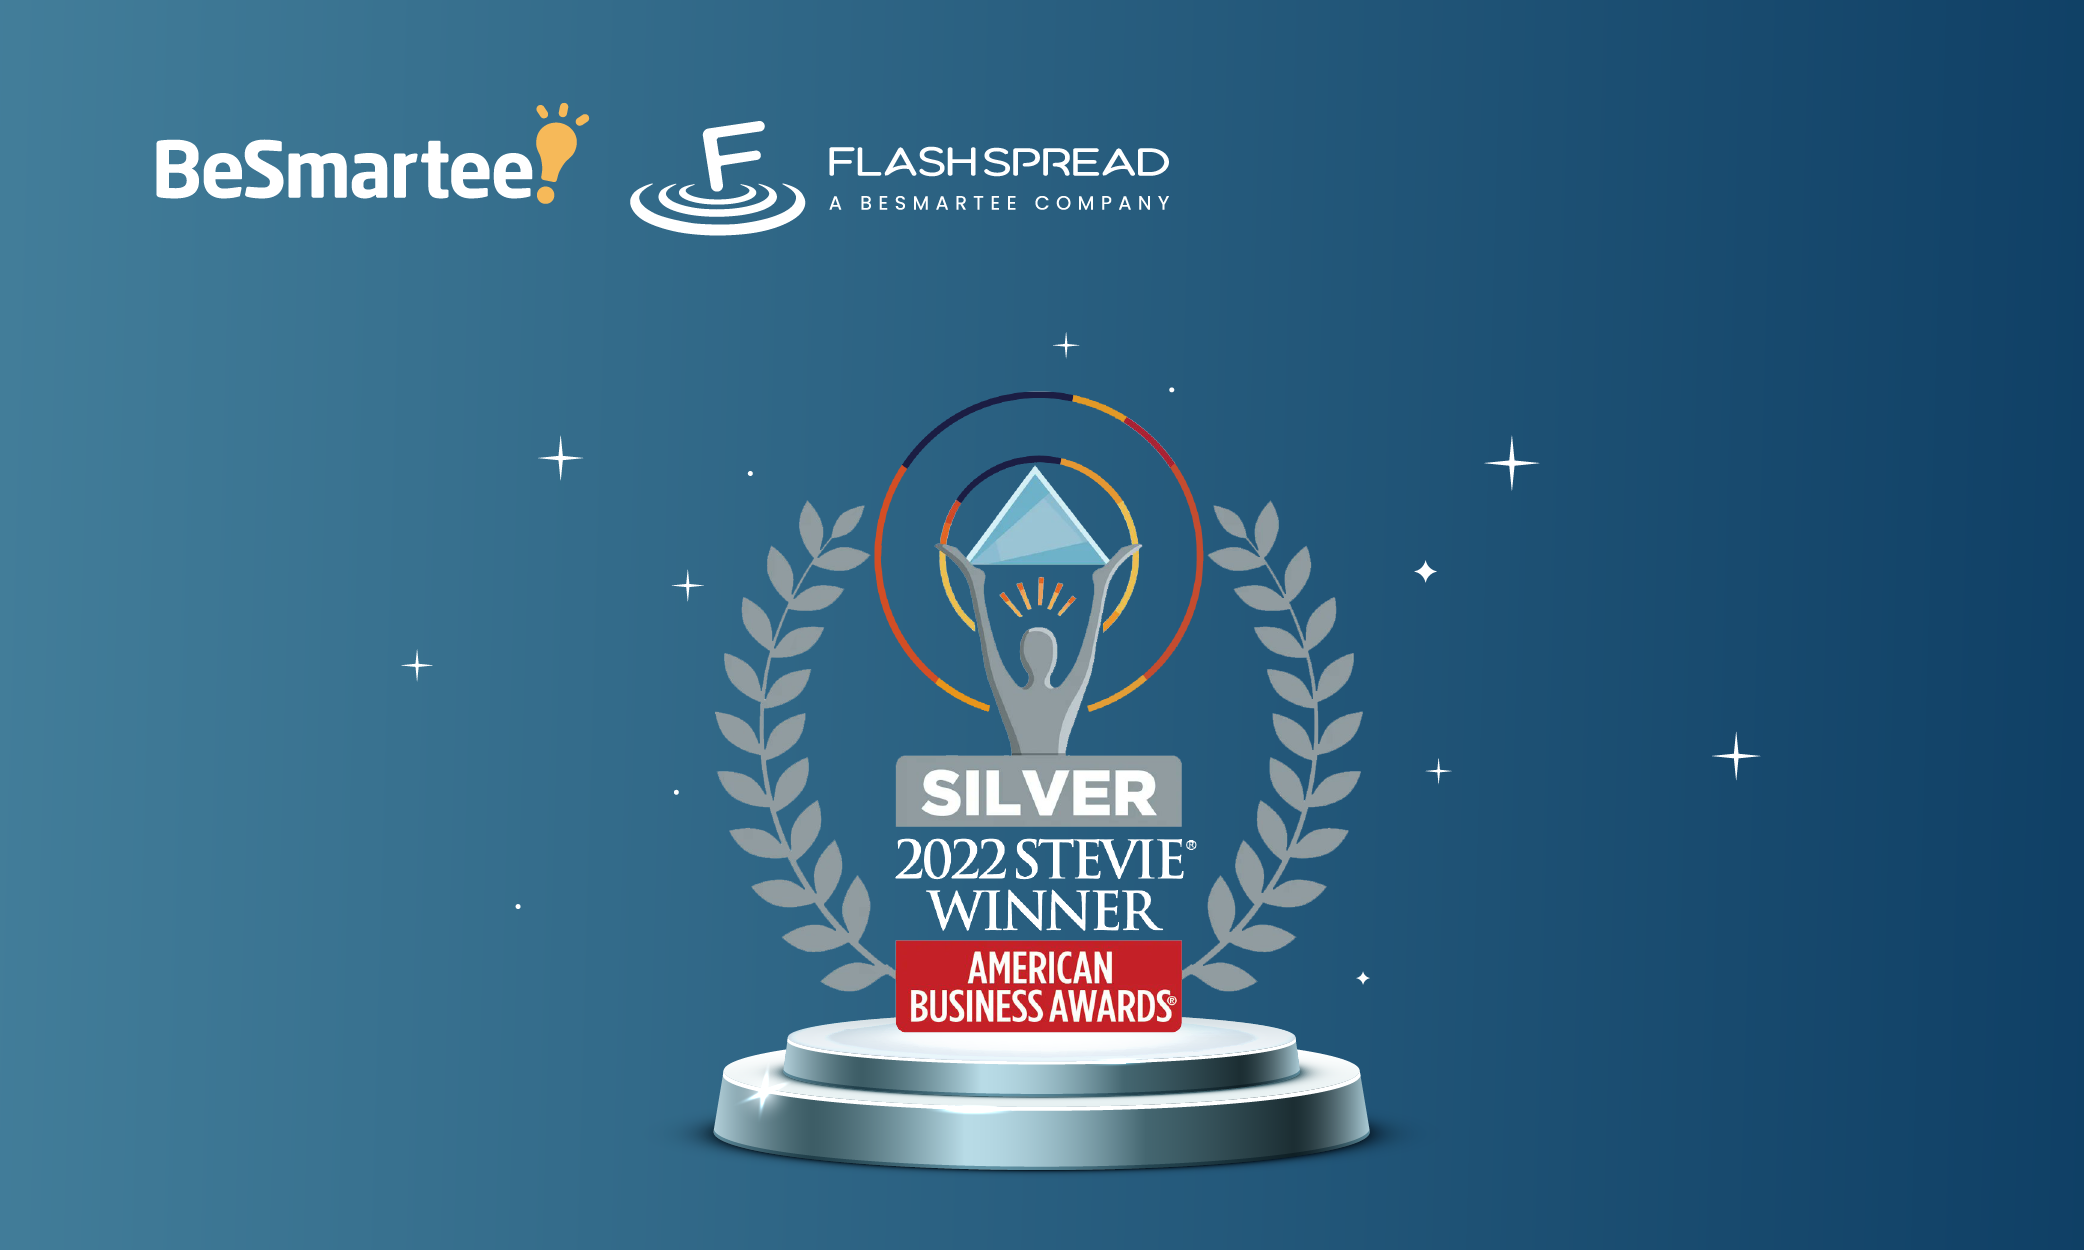 FlashSpread, BeSmartee’s Commercial Lending Technology, Wins Stevie Award for New Fintech Solution